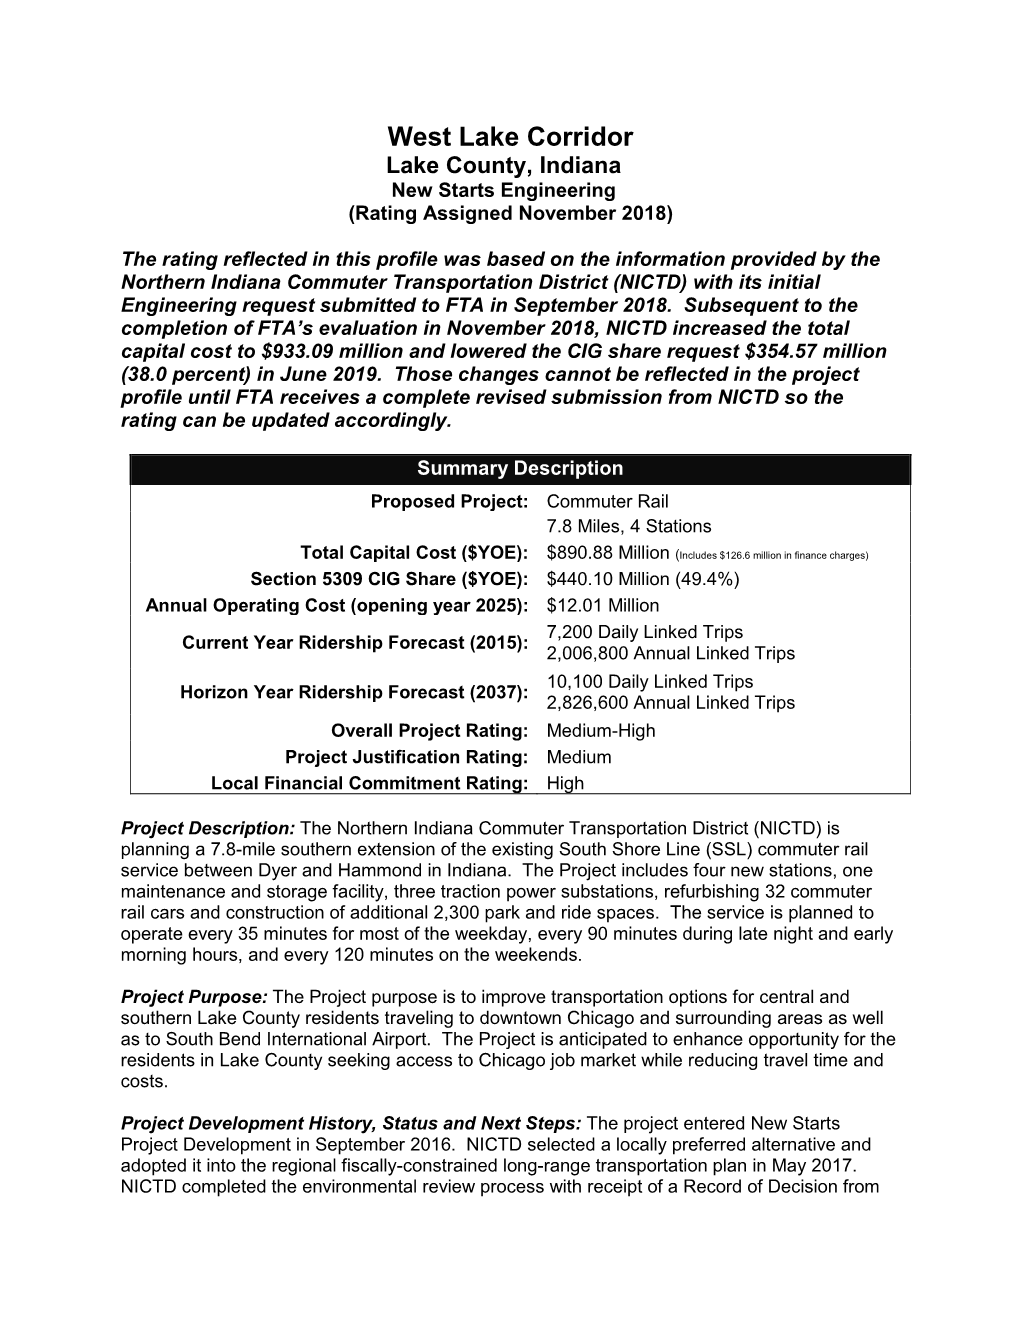 West Lake Corridor Lake County, Indiana New Starts Engineering (Rating Assigned November 2018)